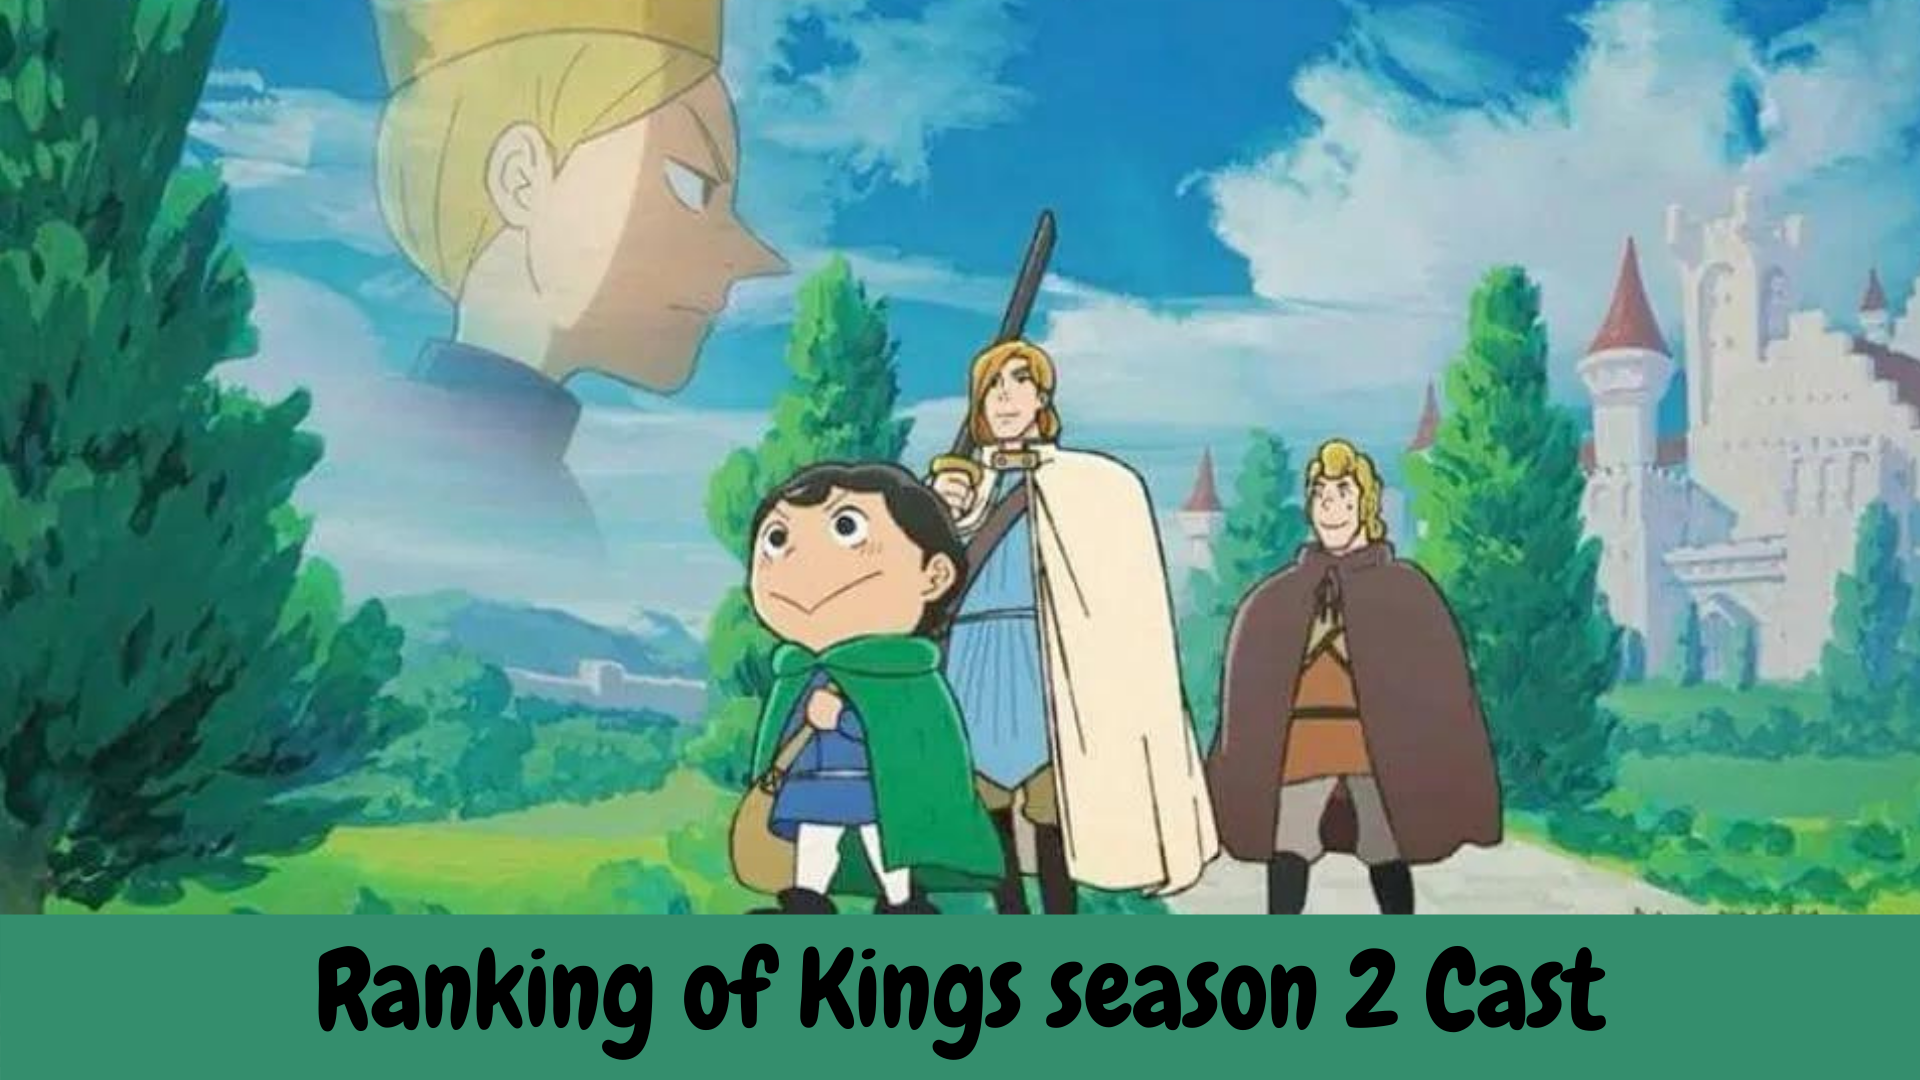 Ranking of Kings season 2 Cast